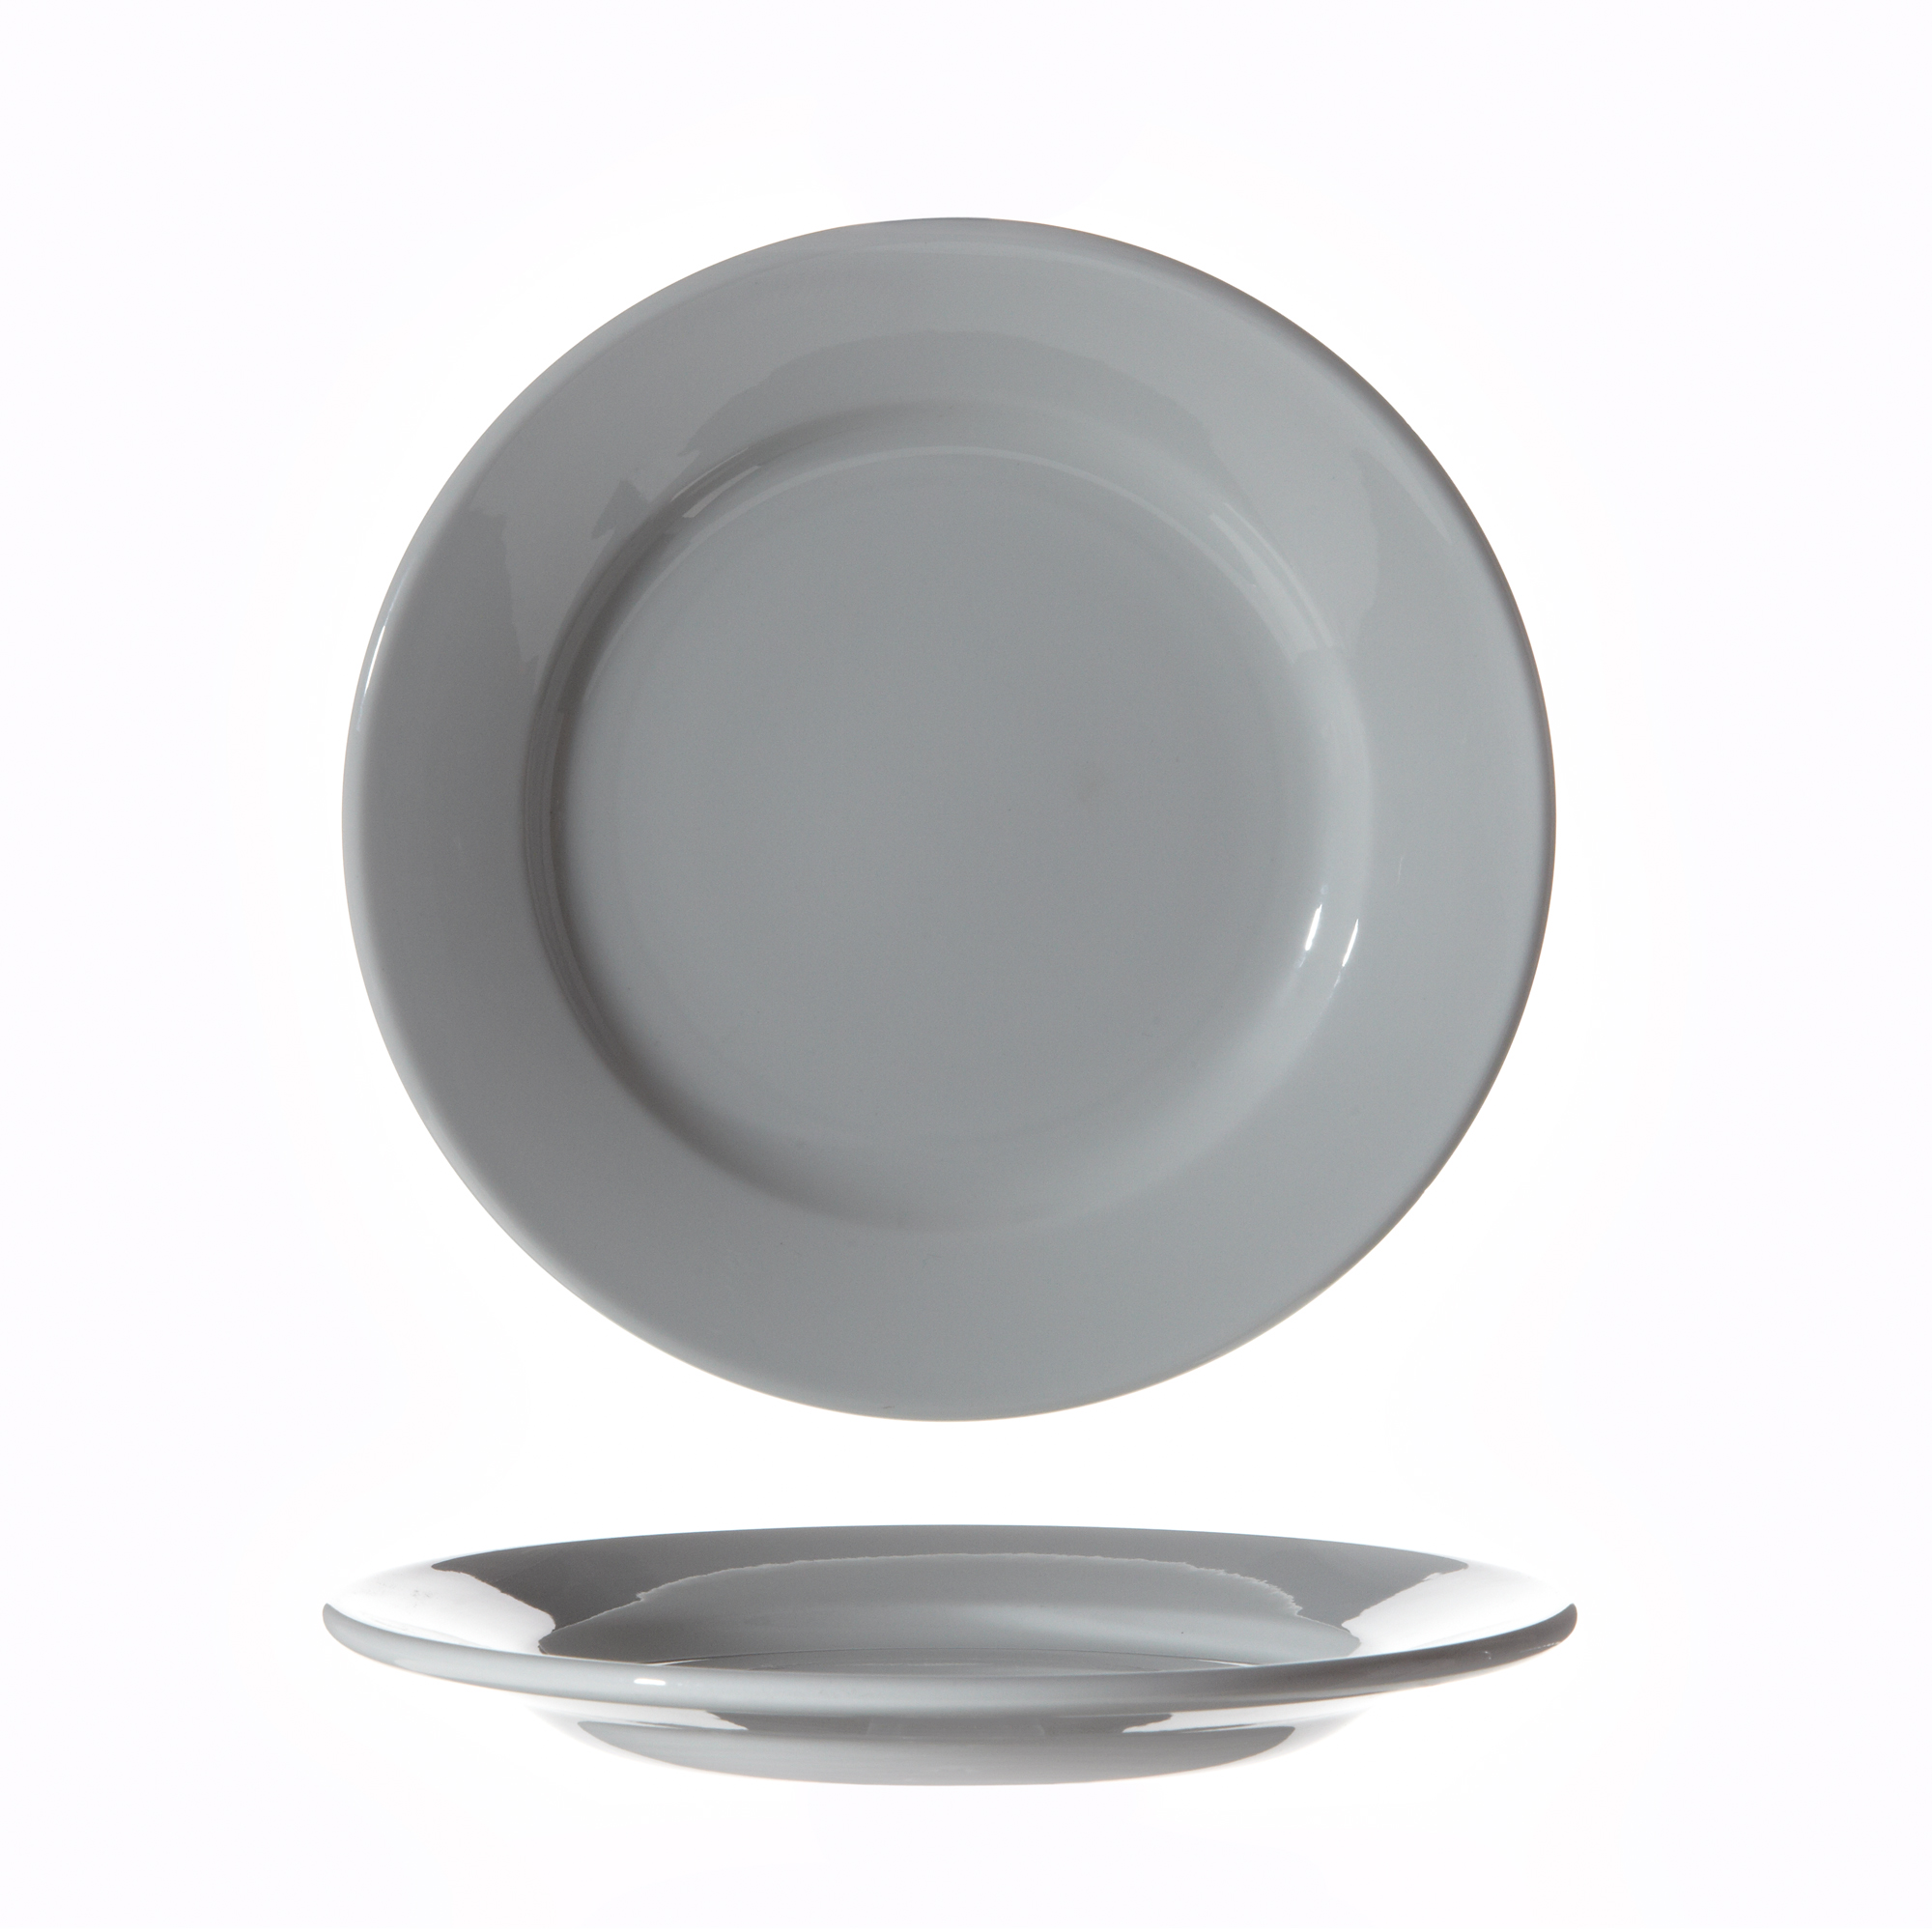 Assiette plate Bourrelet n° 3 en porcelaine diam 228 mm - Réf. 591002 - Illustration n°1